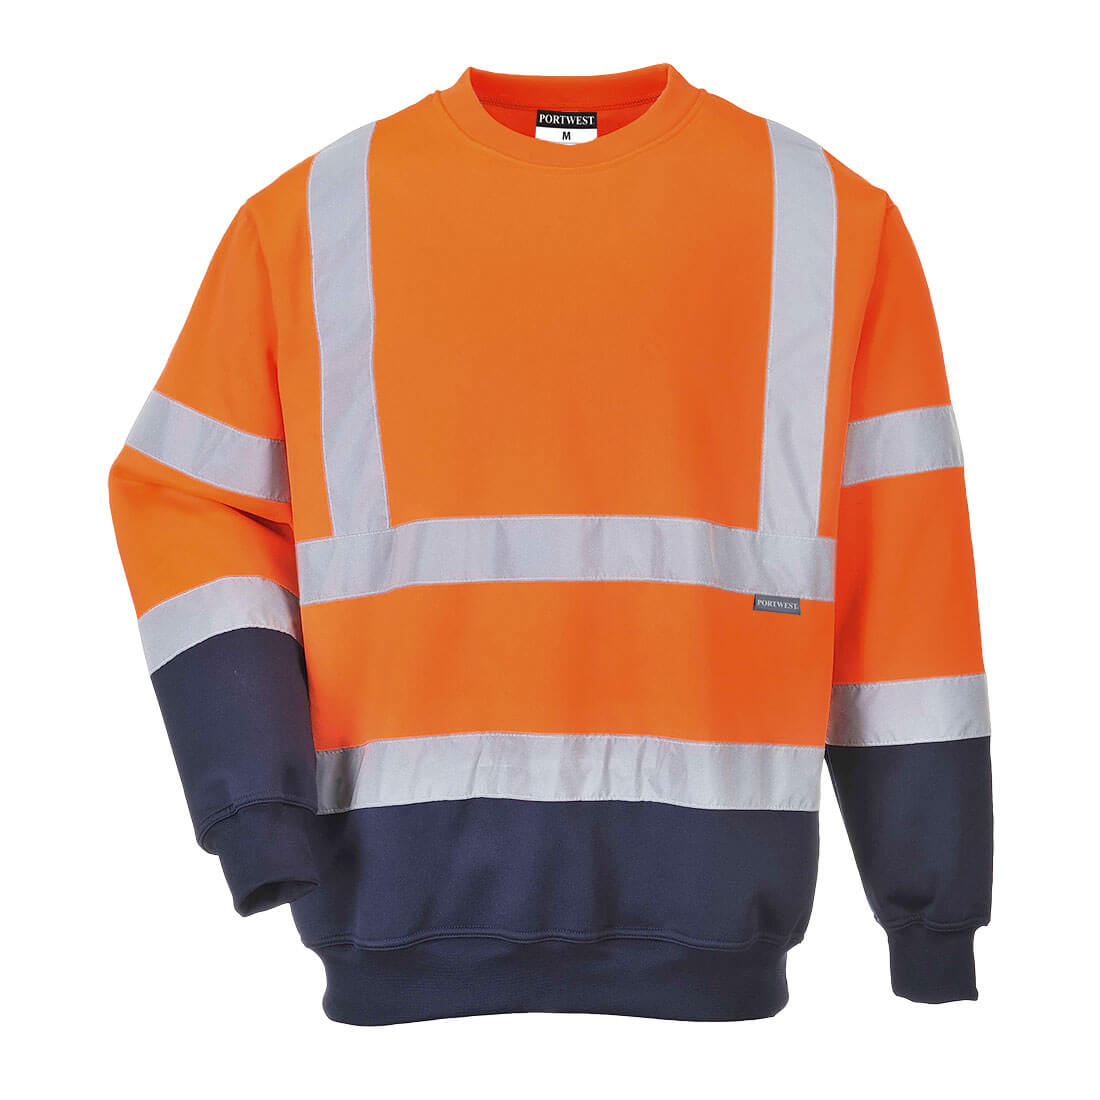 Two Tone Hi-Vis Sweatshirt - Orange/Navy